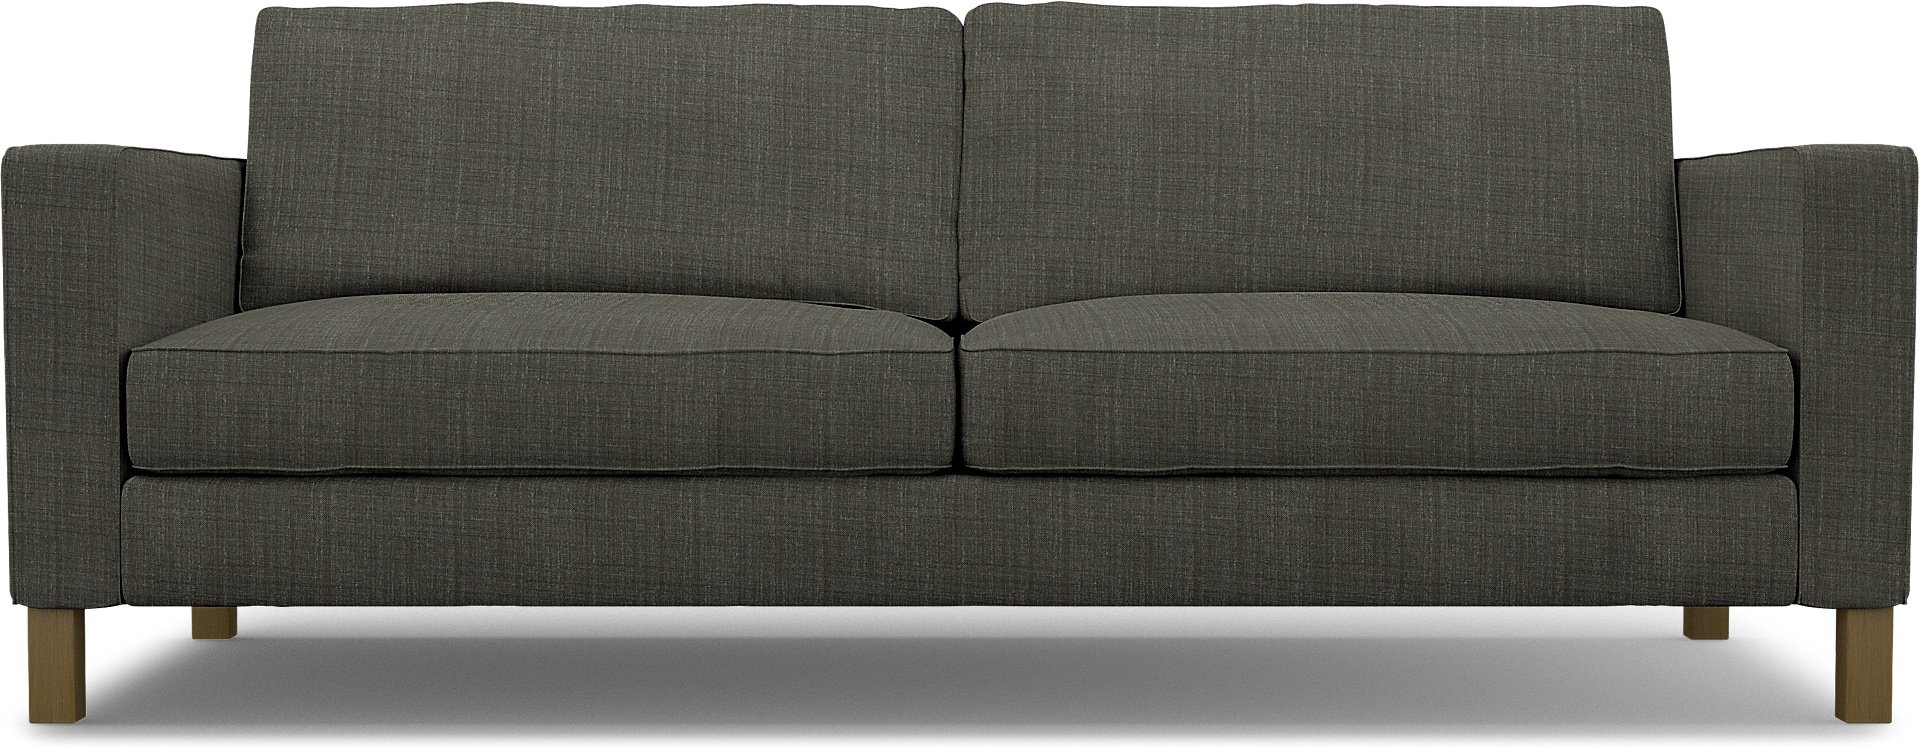 IKEA - Karlstad 3 Seater Sofa Cover, Mole Brown, Boucle & Texture - Bemz